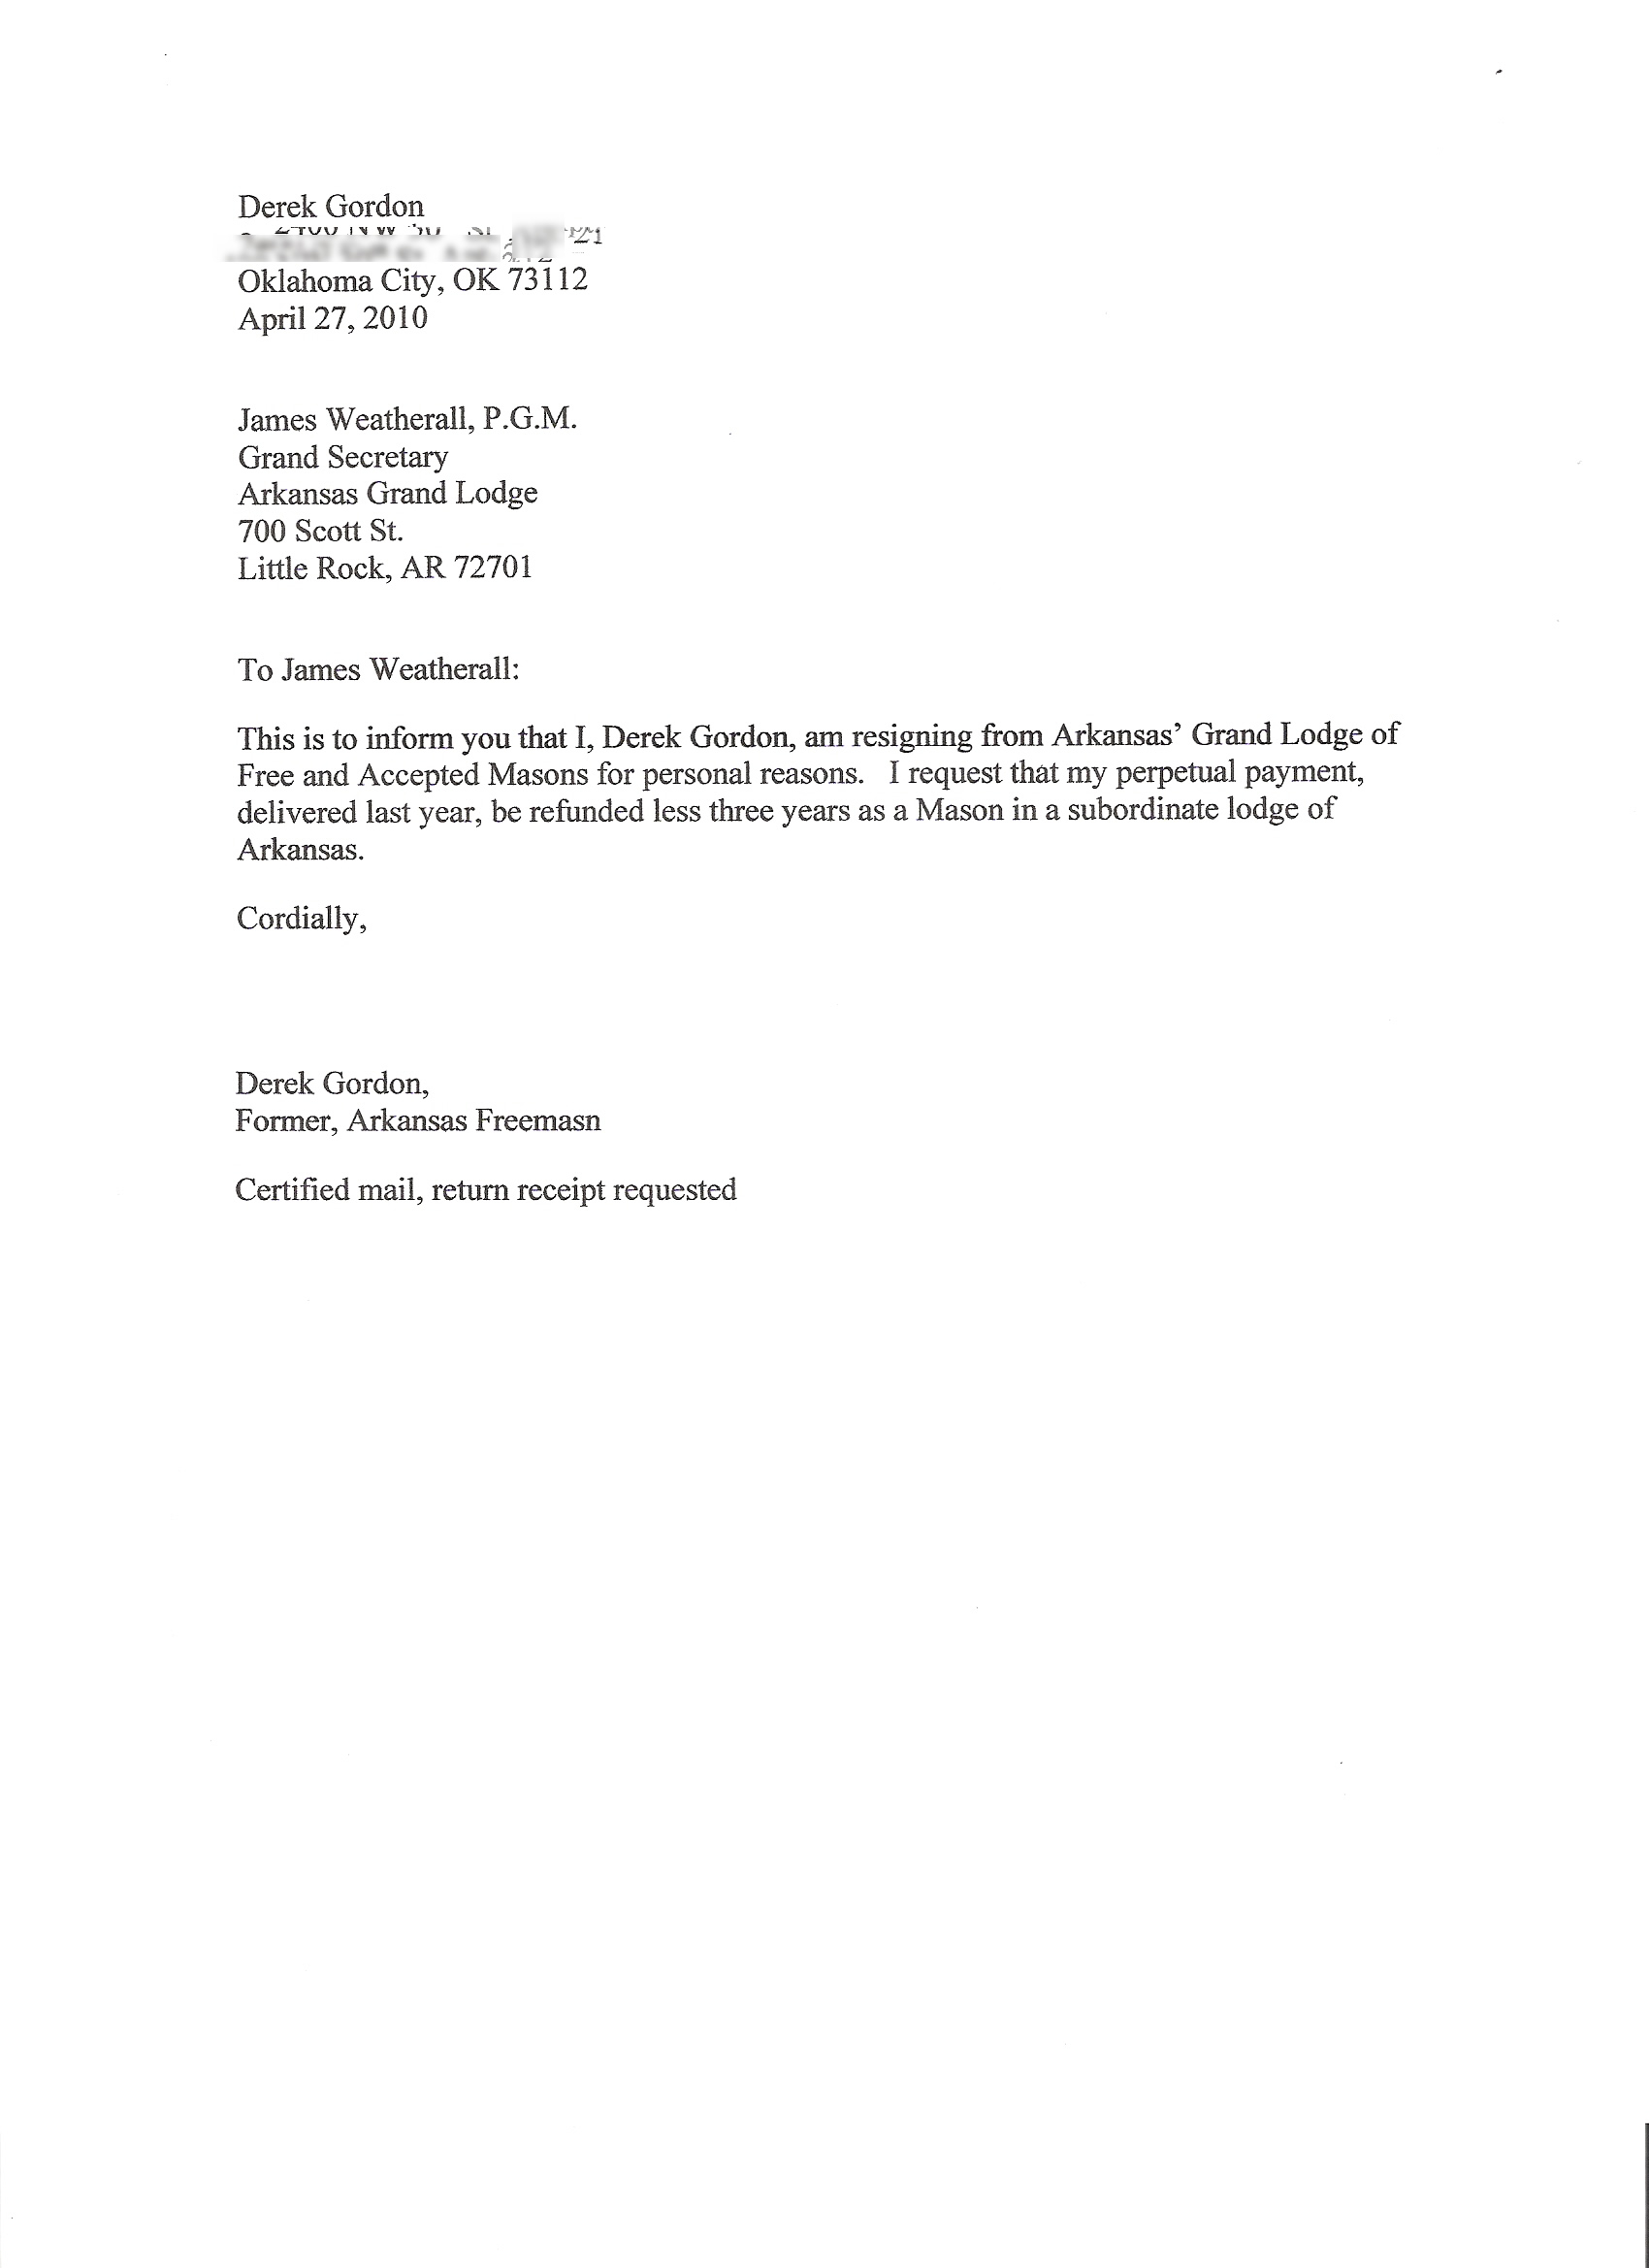 Resignation Letter - 24 Hour Notice.